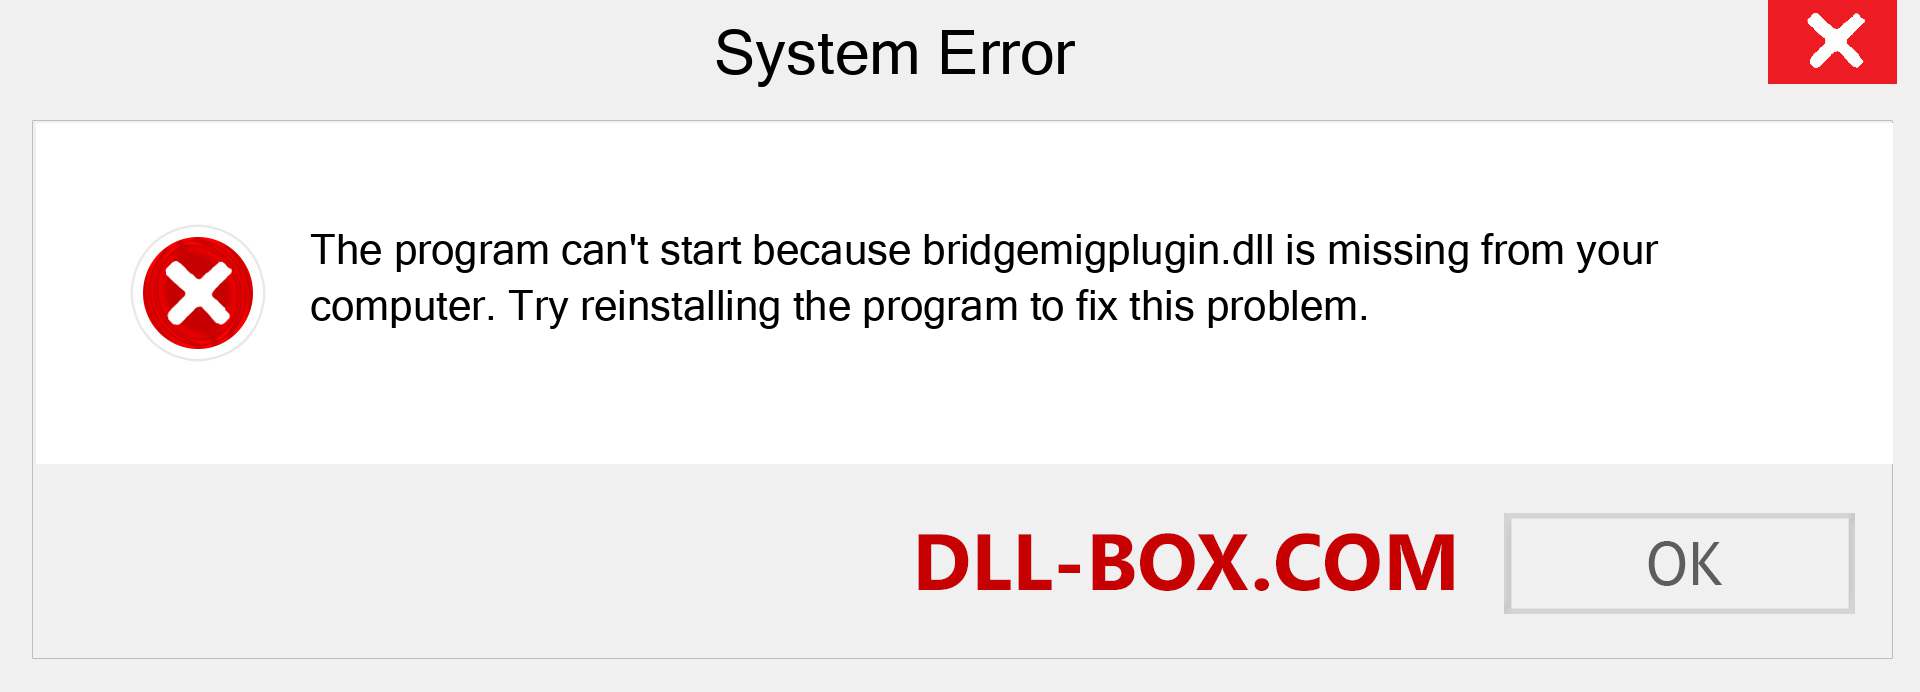  bridgemigplugin.dll file is missing?. Download for Windows 7, 8, 10 - Fix  bridgemigplugin dll Missing Error on Windows, photos, images